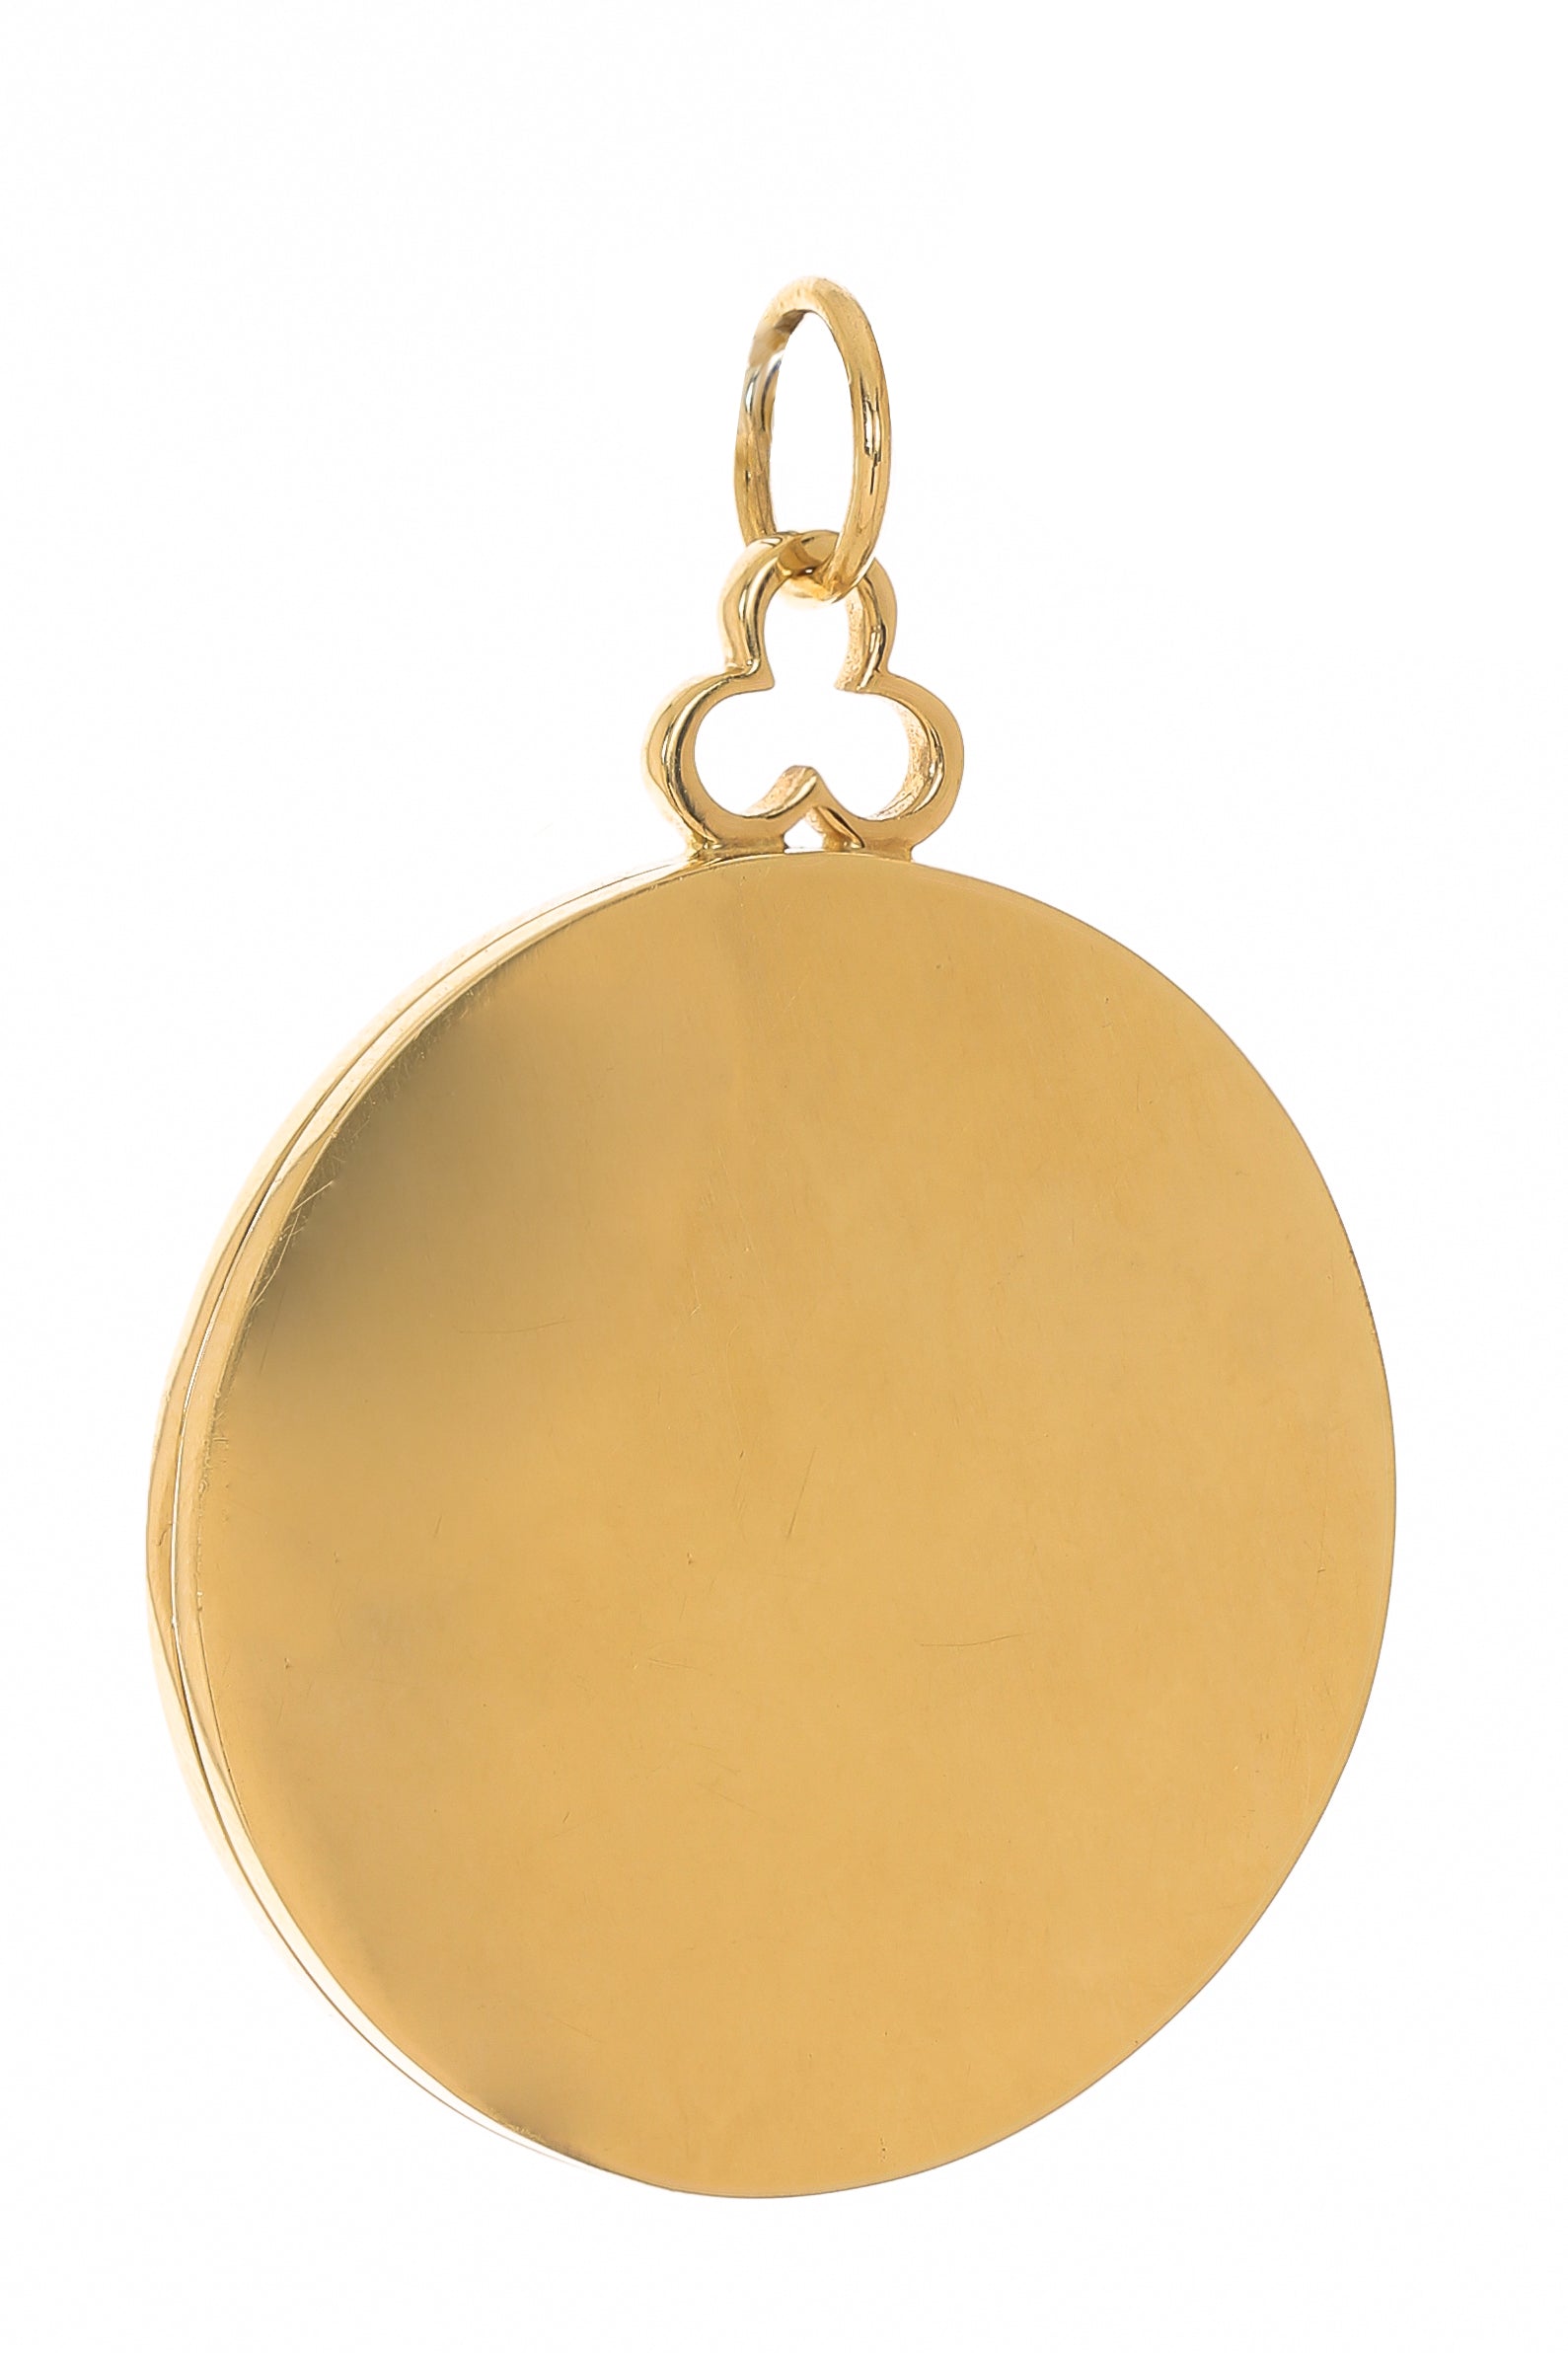 DEVON WOODHILL-Large Goddess Locket Necklace-YELLOW GOLD